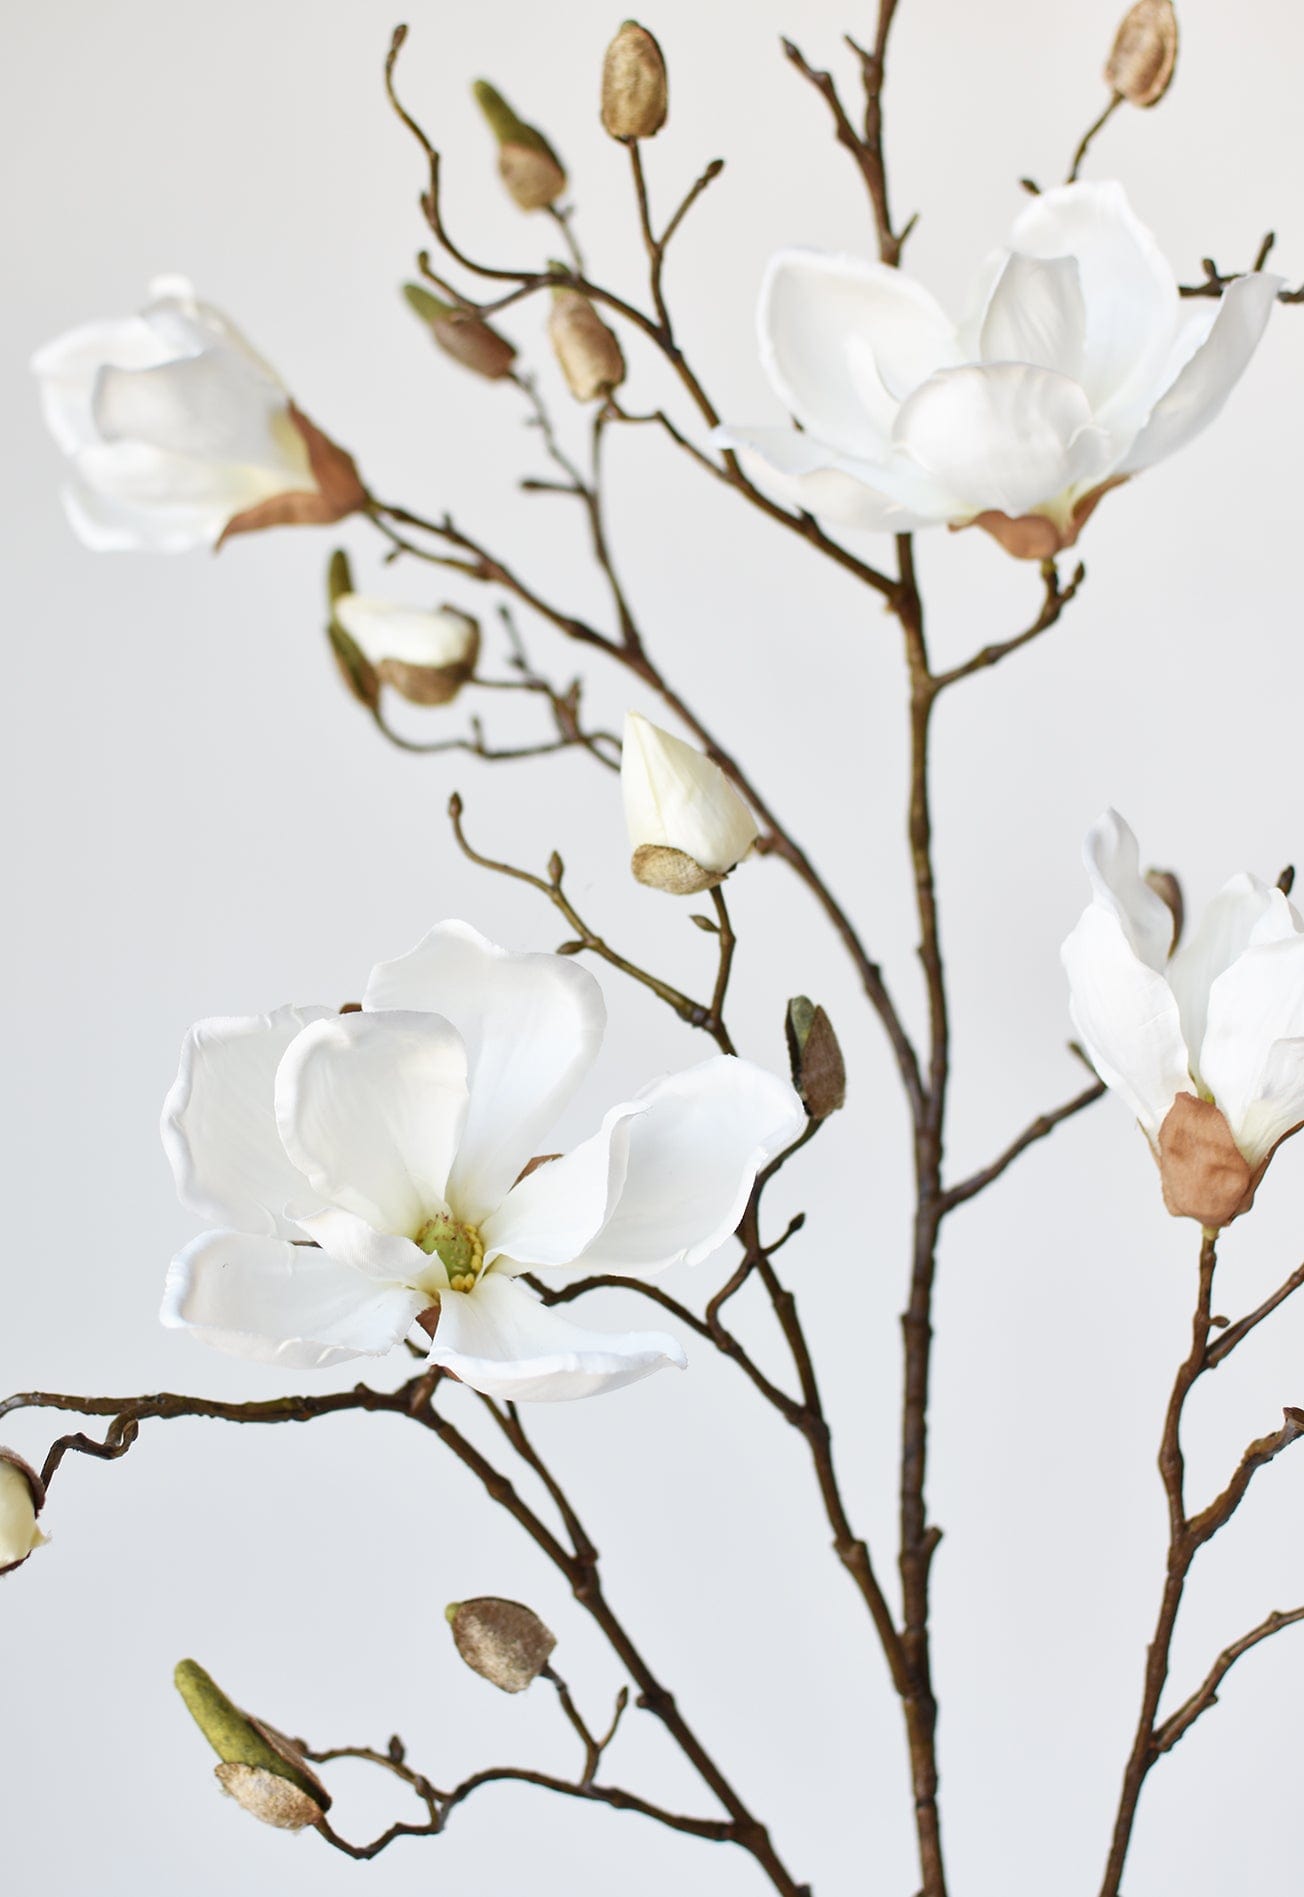 magnolia tree branch